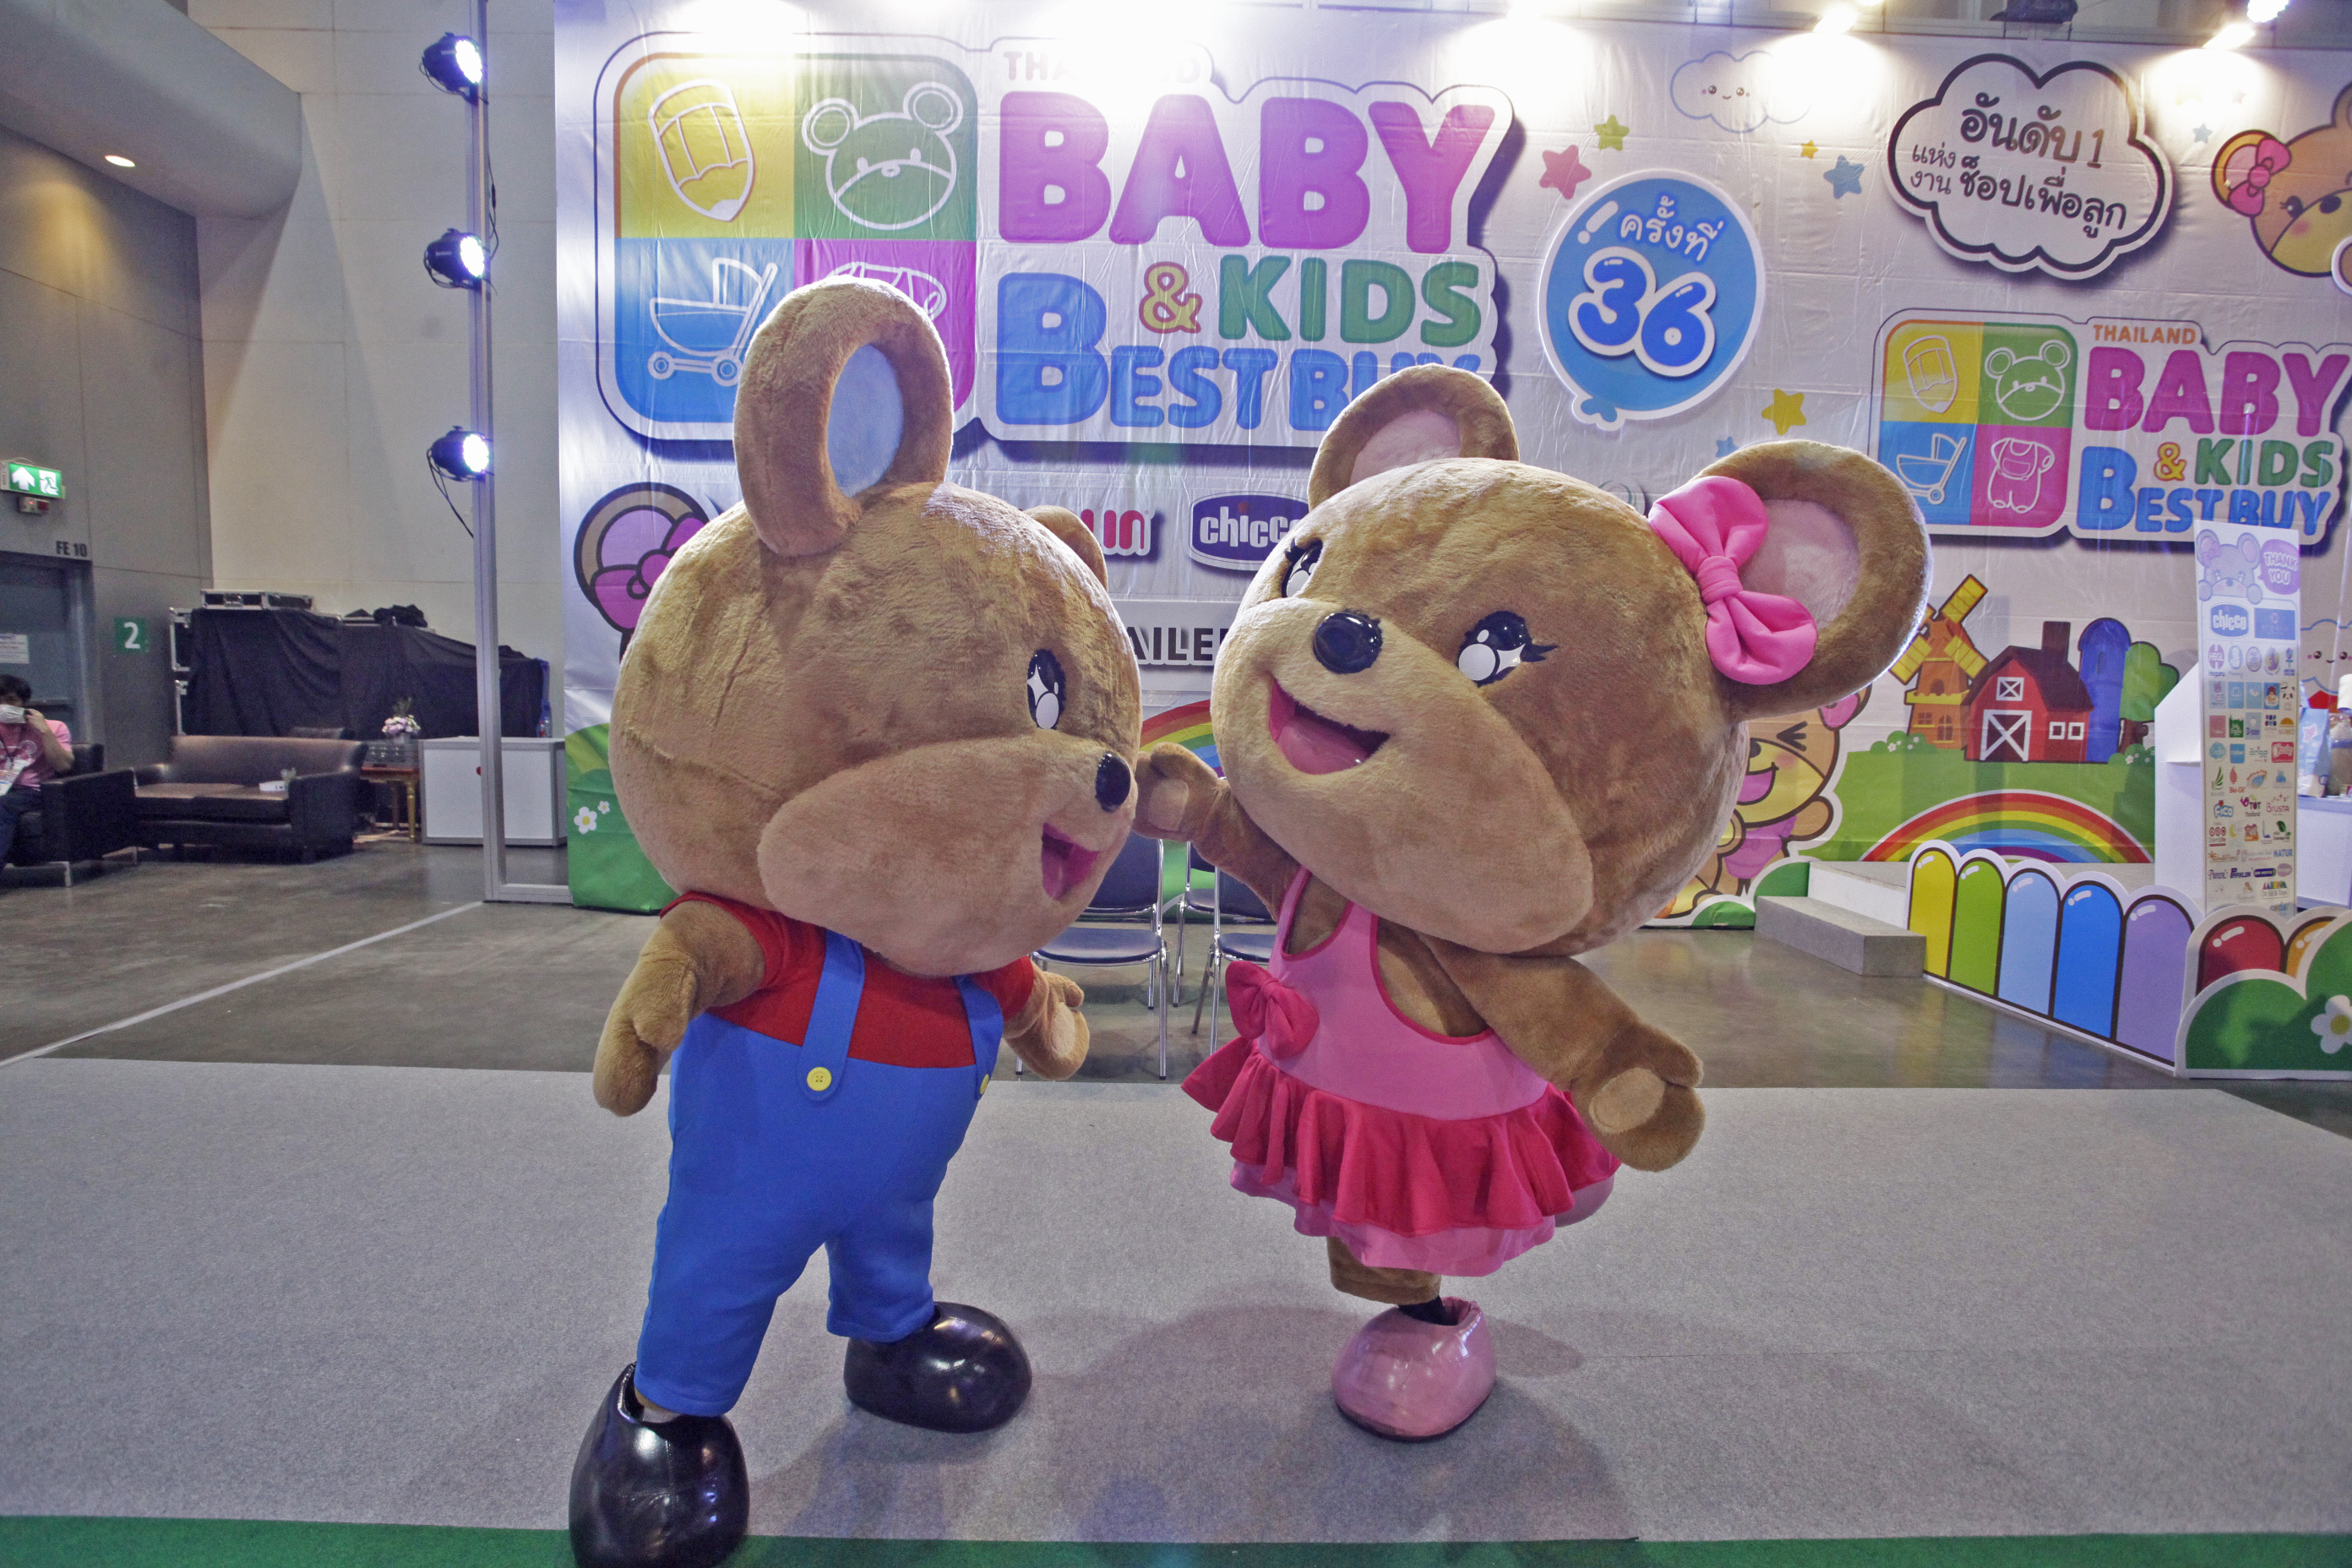 Thailand Baby & Kids Best Buy ครั้งที่ 36